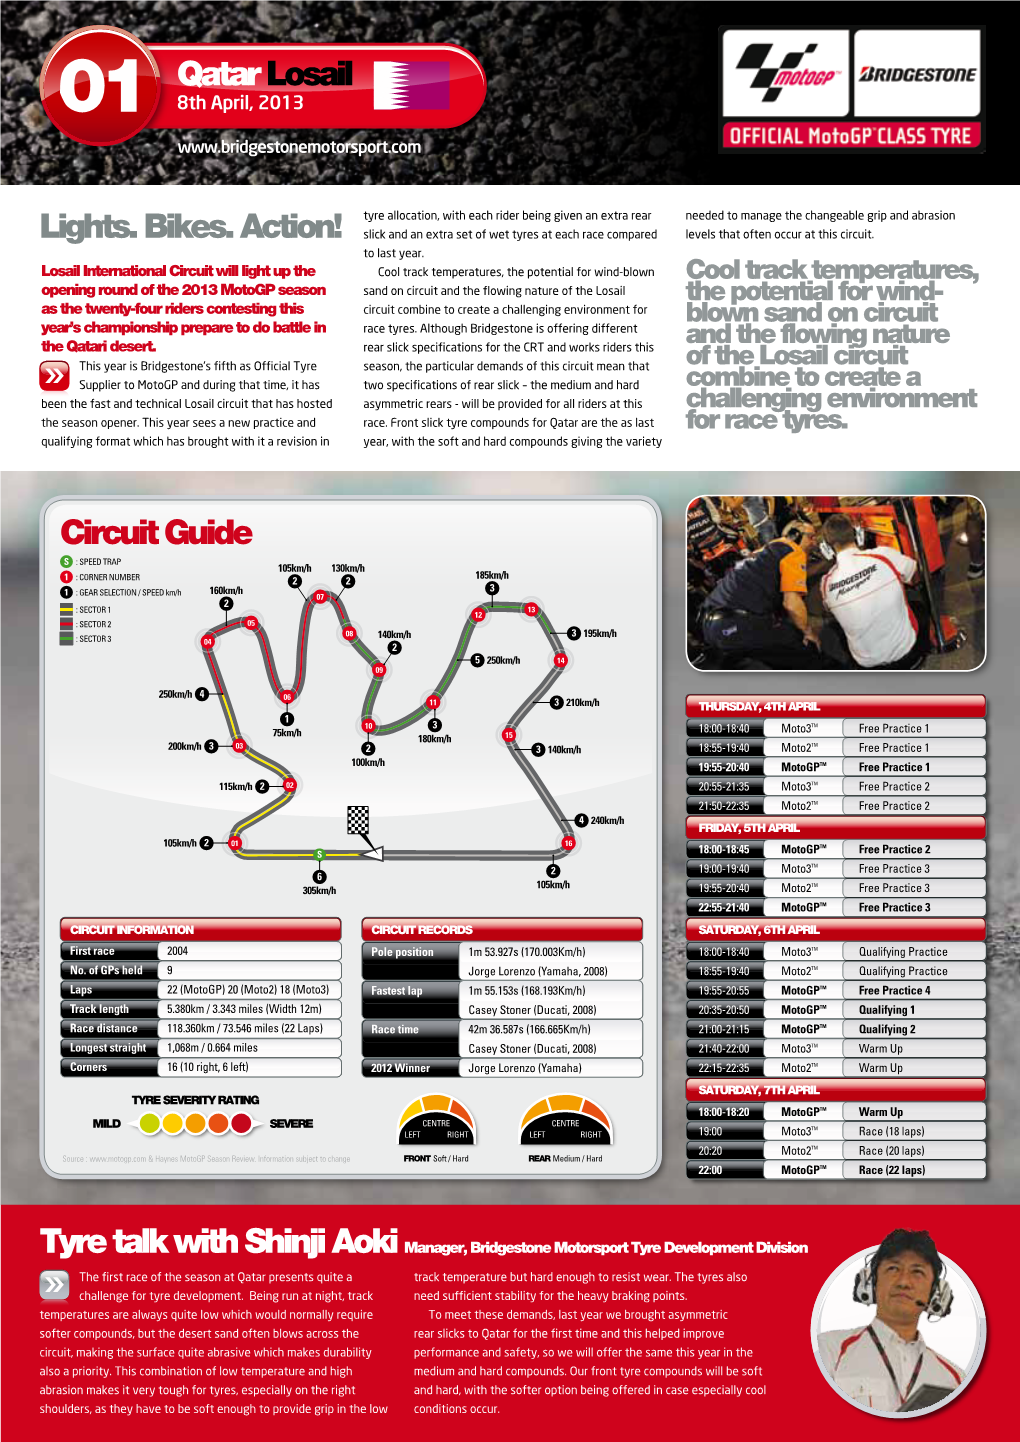 Qatar Losail Circuit Guide